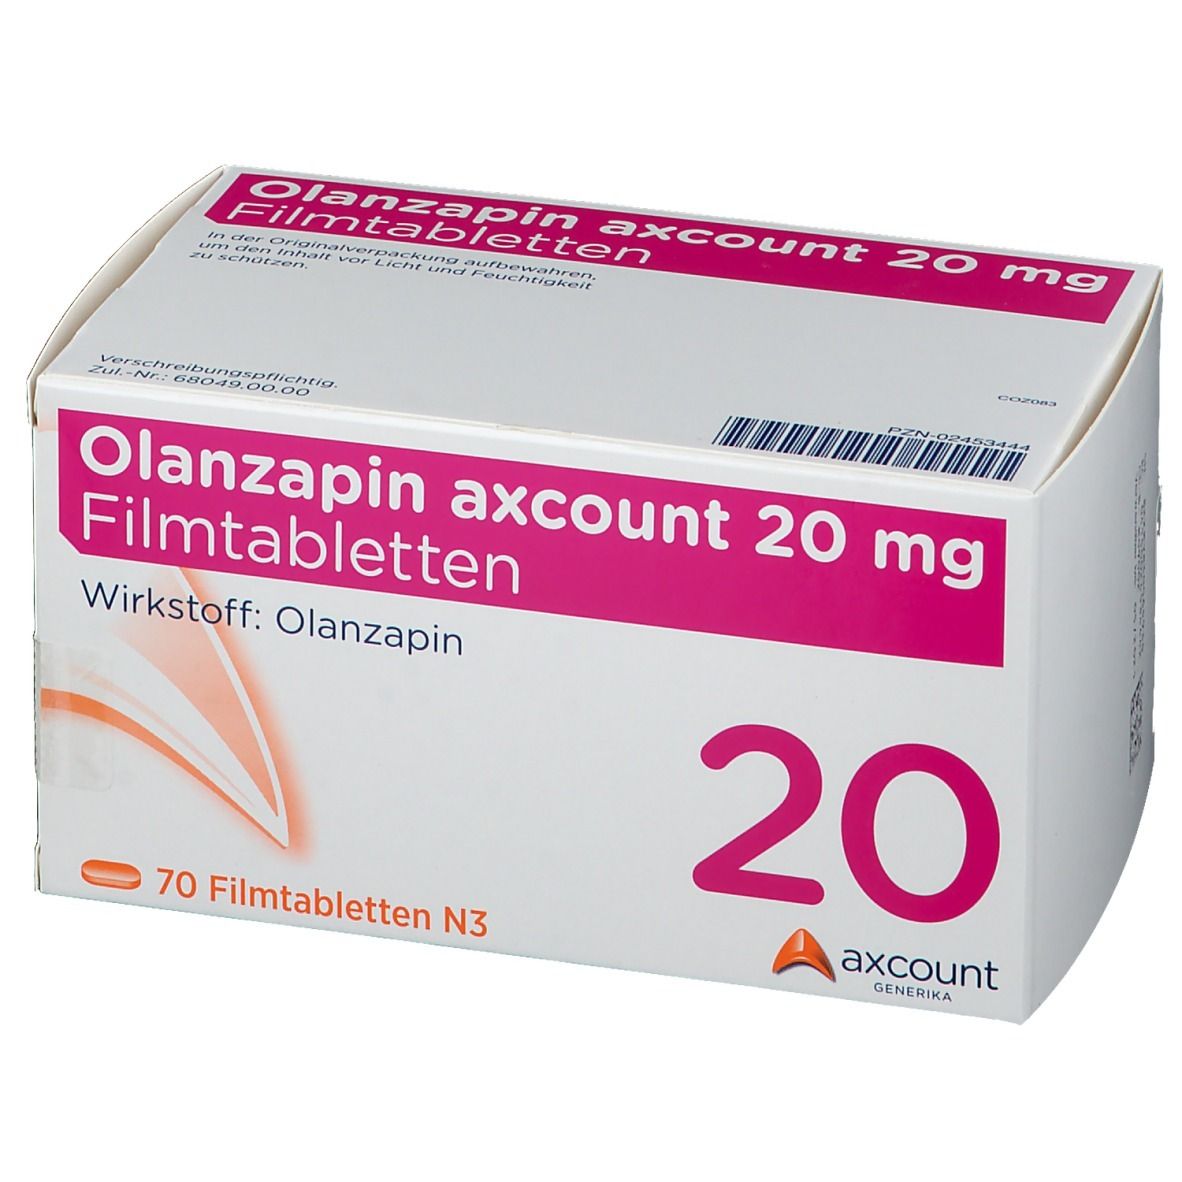 Olanzapin axcount 20 mg